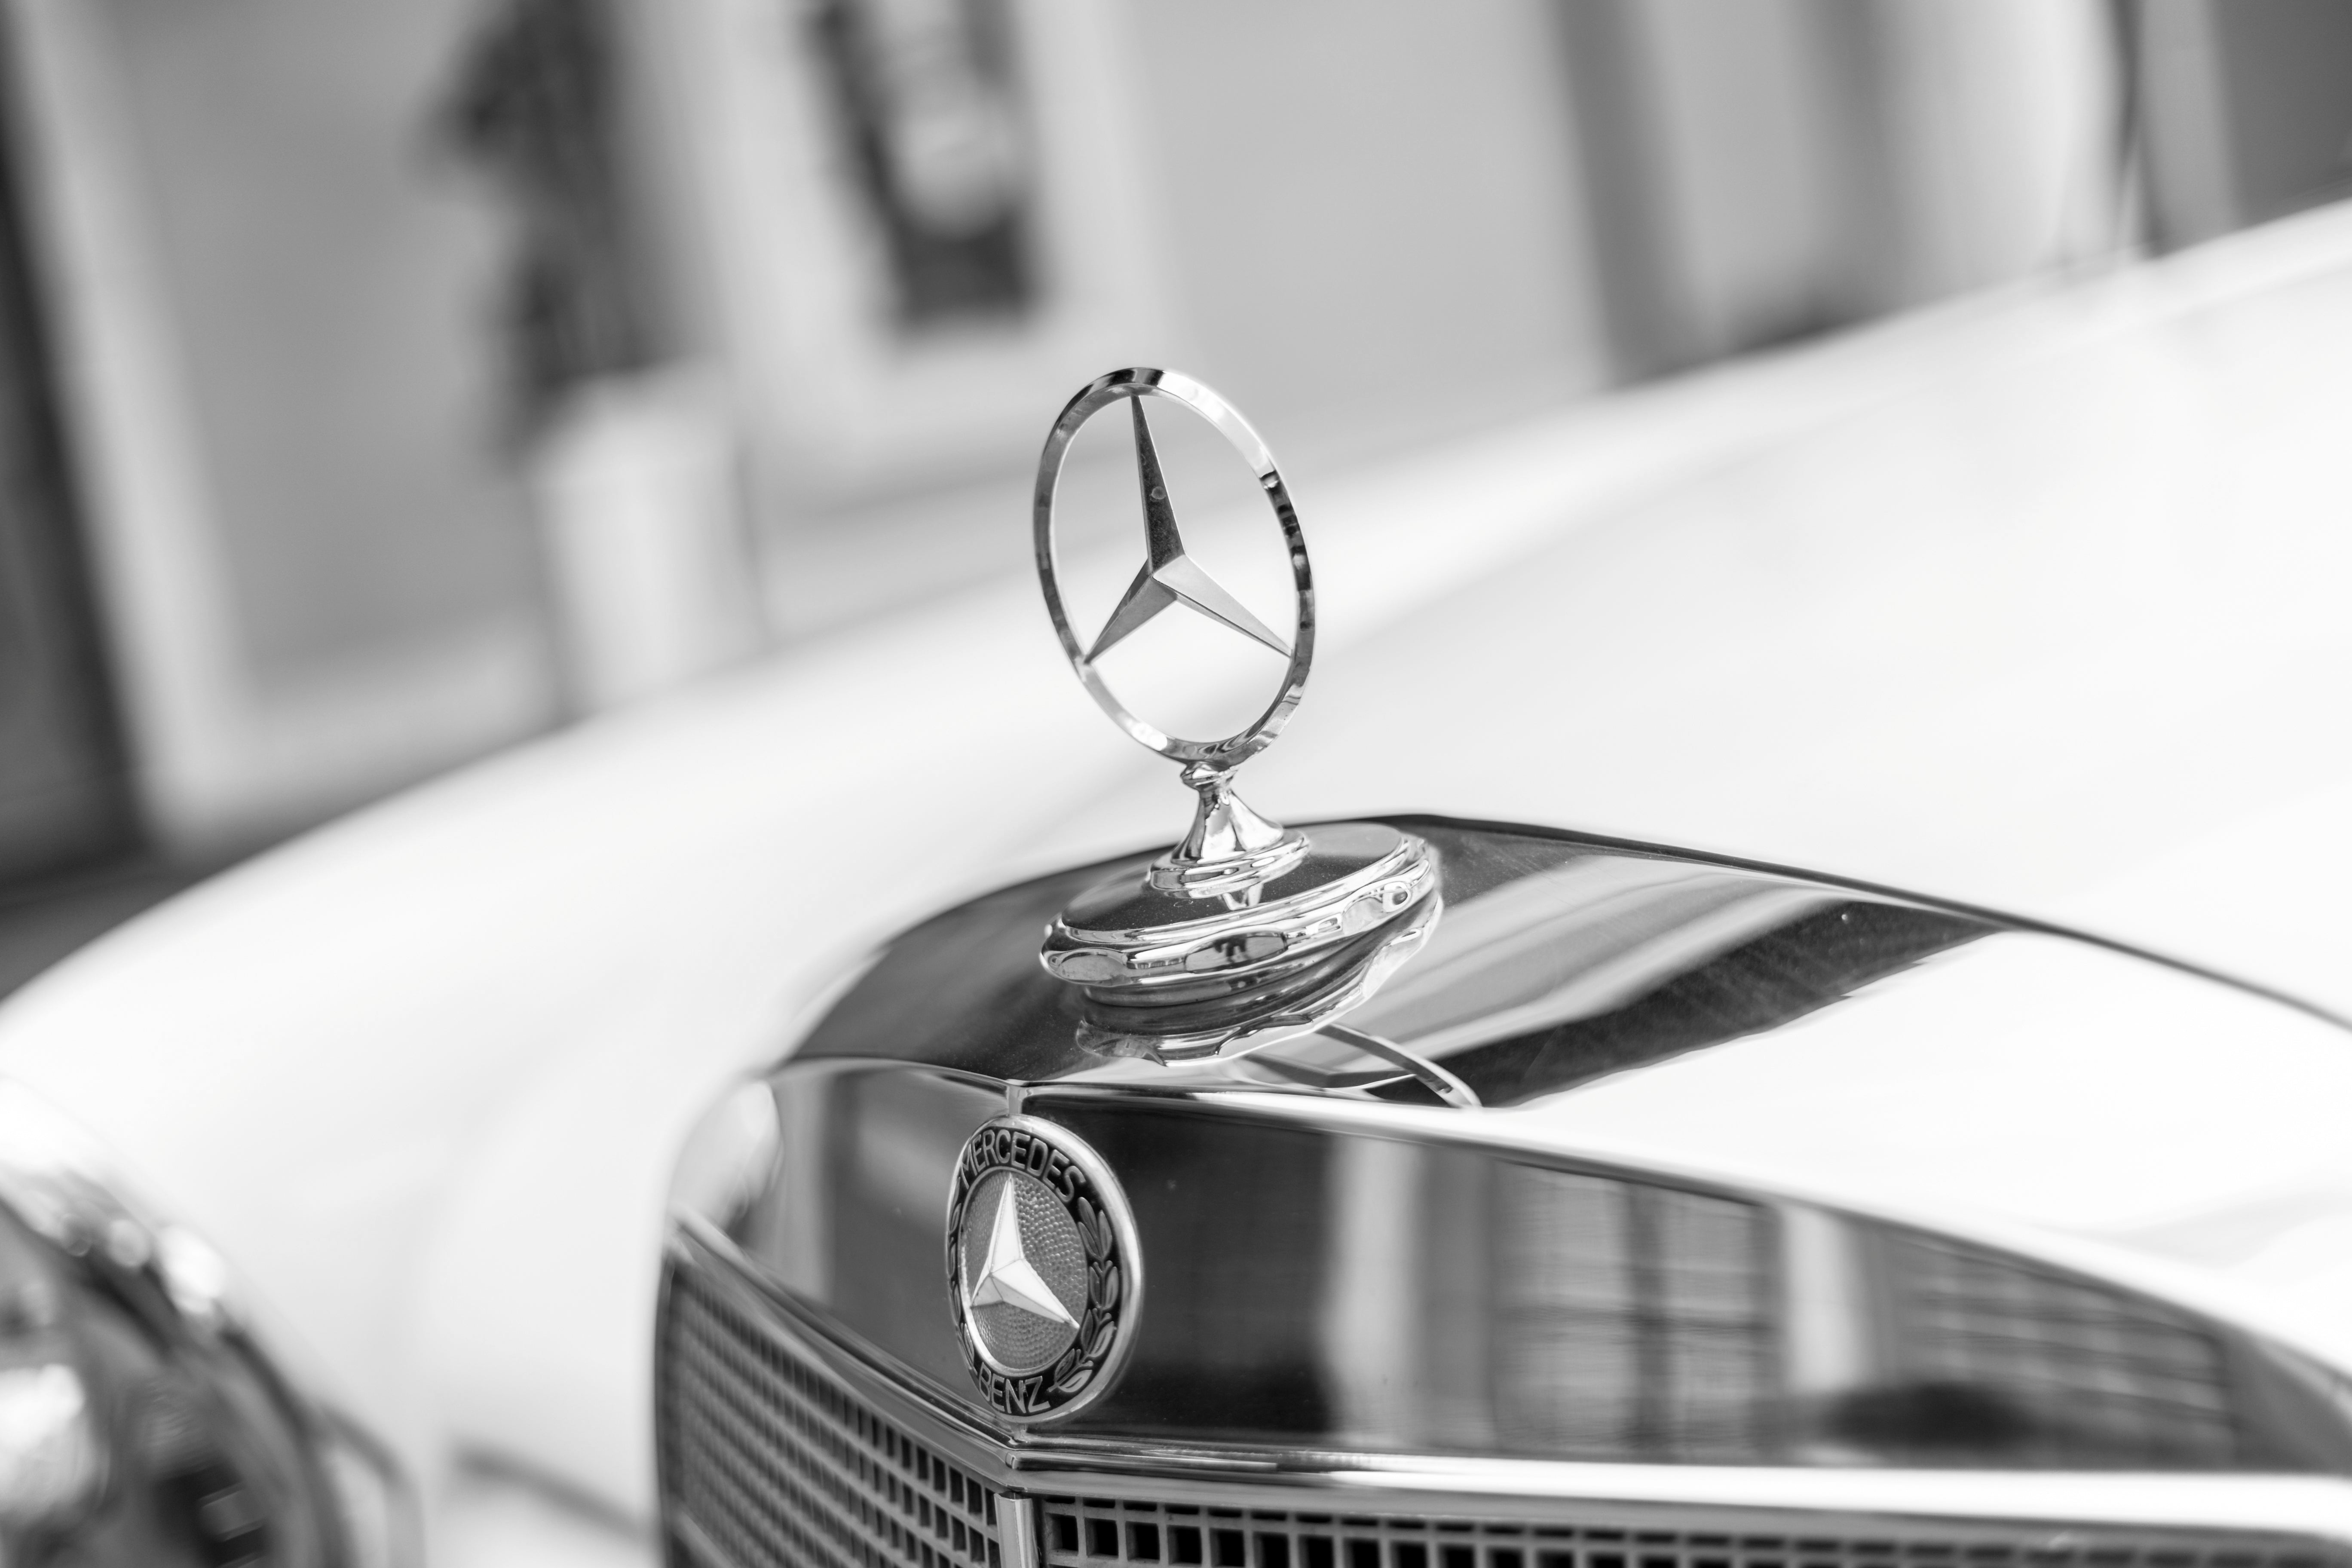 1965 Mercedes-Benz 220SEb Coupe FINE ART PRINT